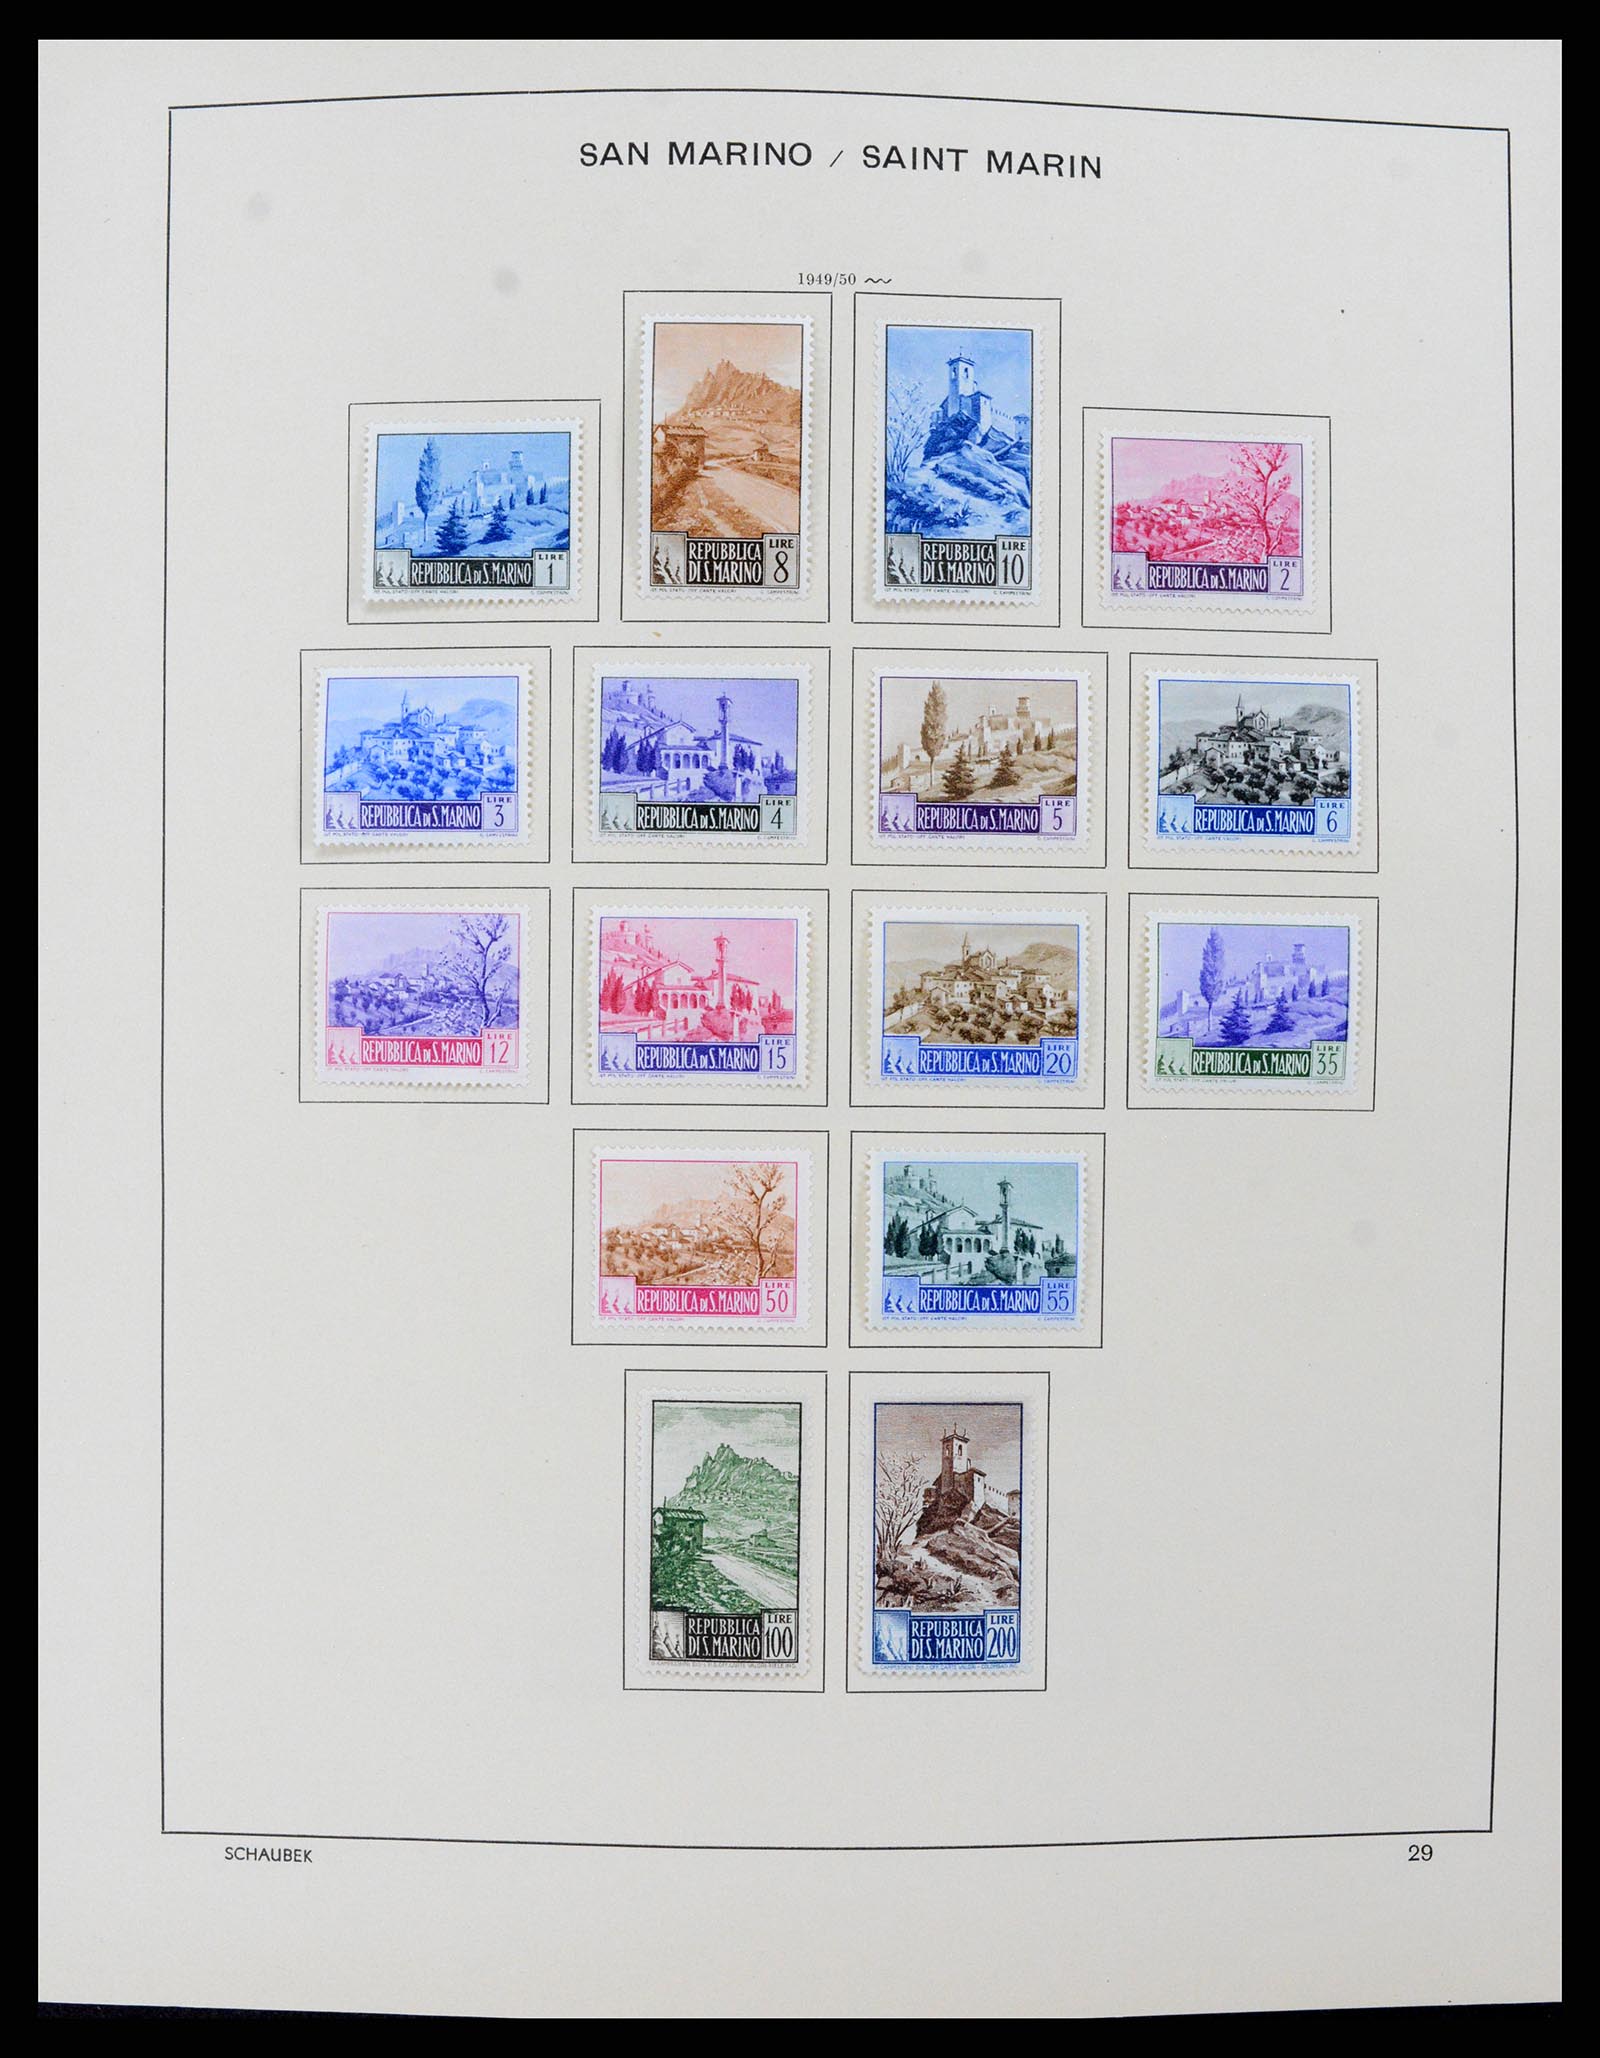 37556 029 - Stamp collection 37556 San Marino 1877-2017.